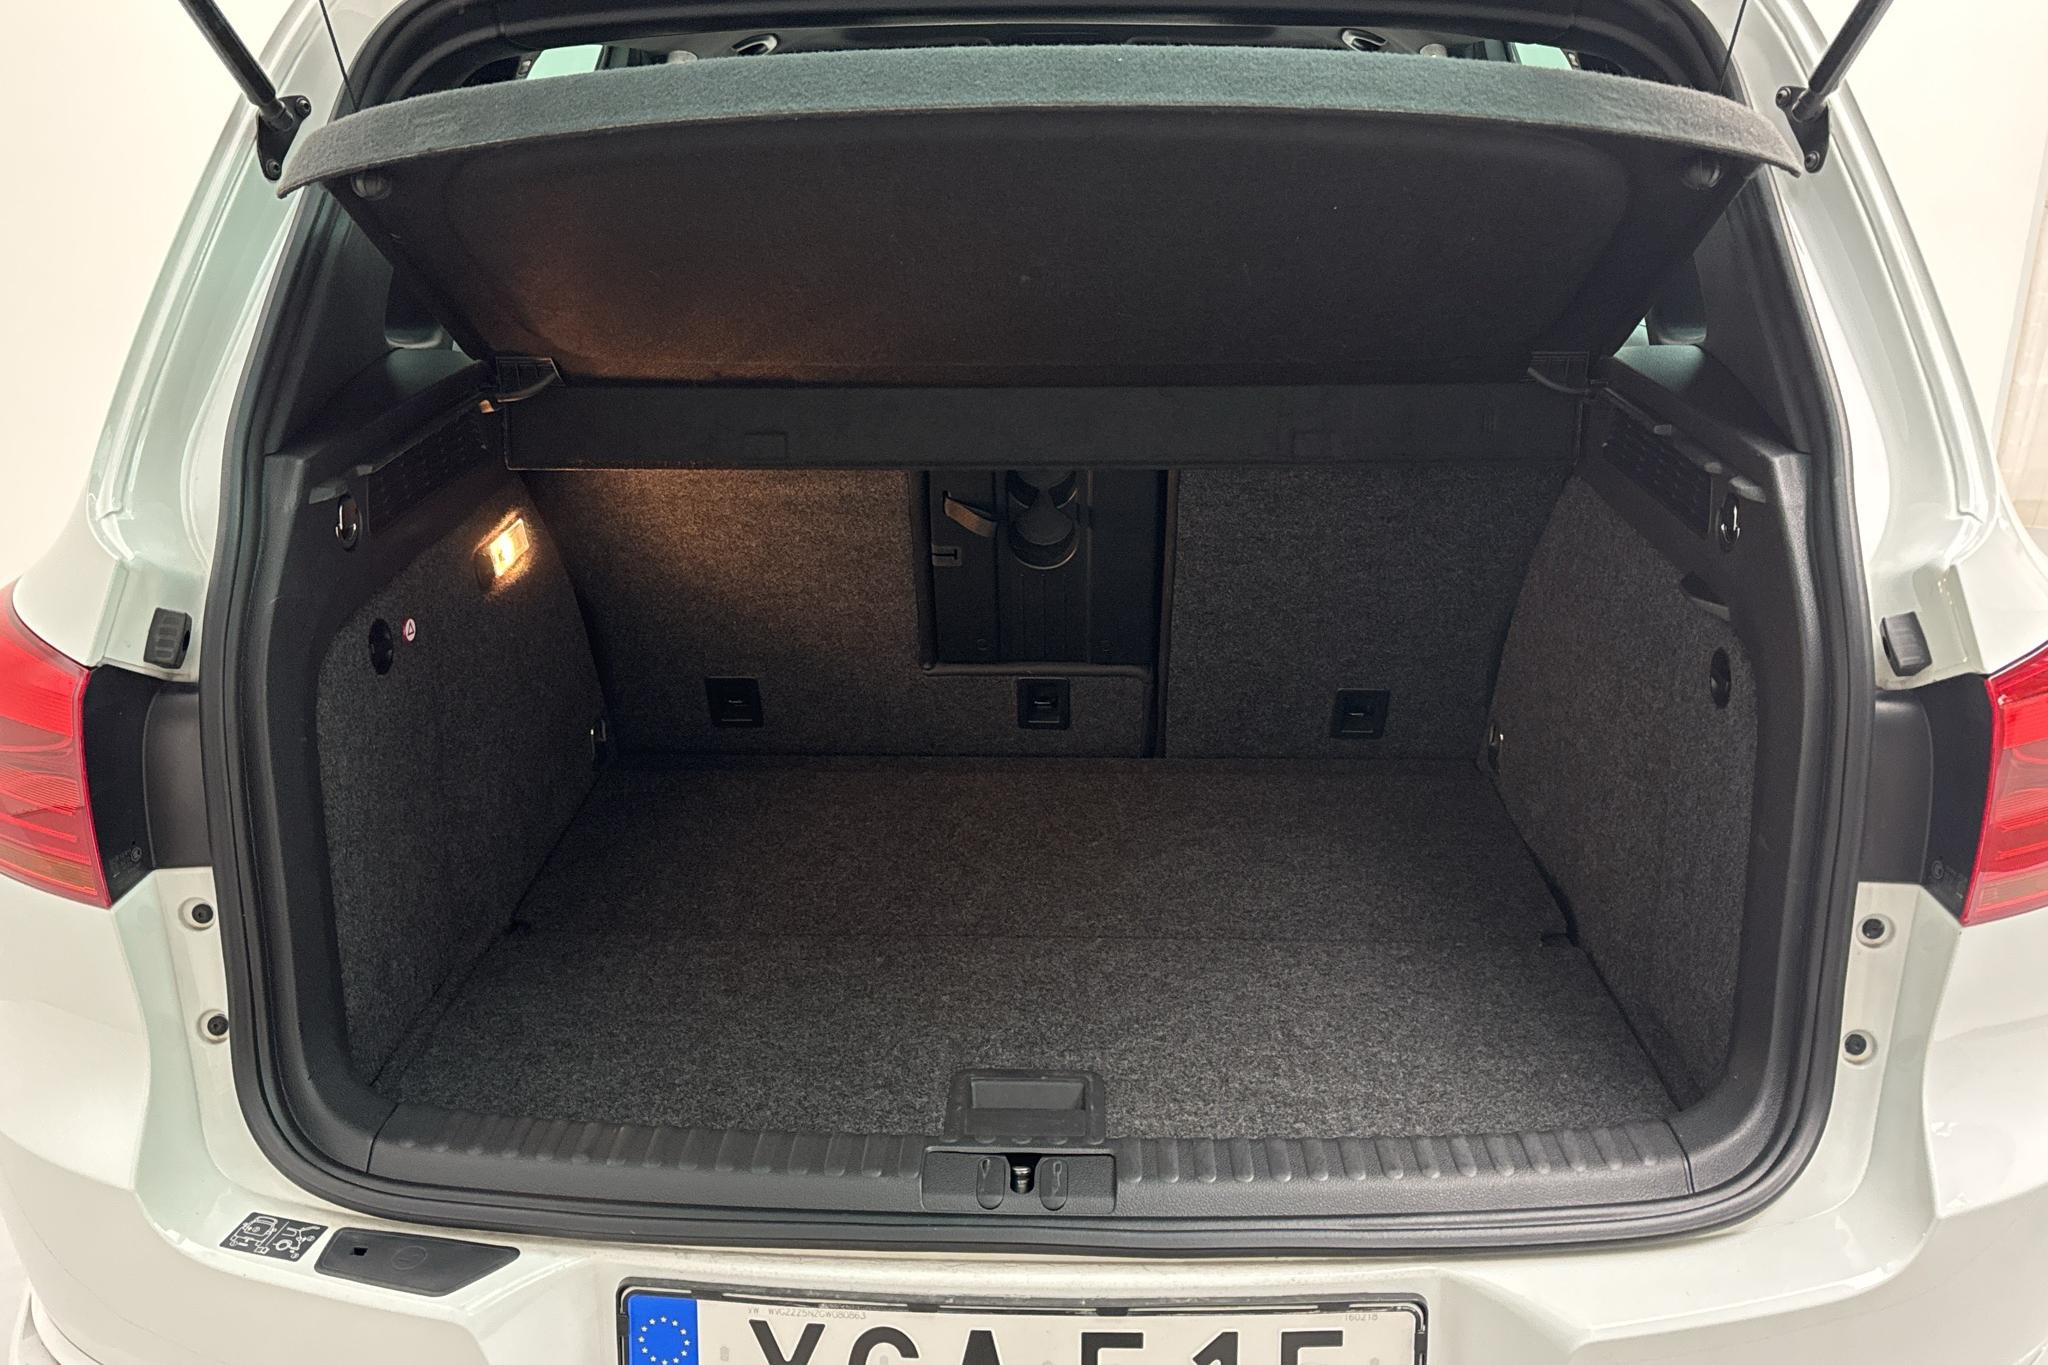 VW Tiguan 2.0 TDI 4MOTION BlueMotion Technology (184hk) - 149 290 km - Automaatne - valge - 2016